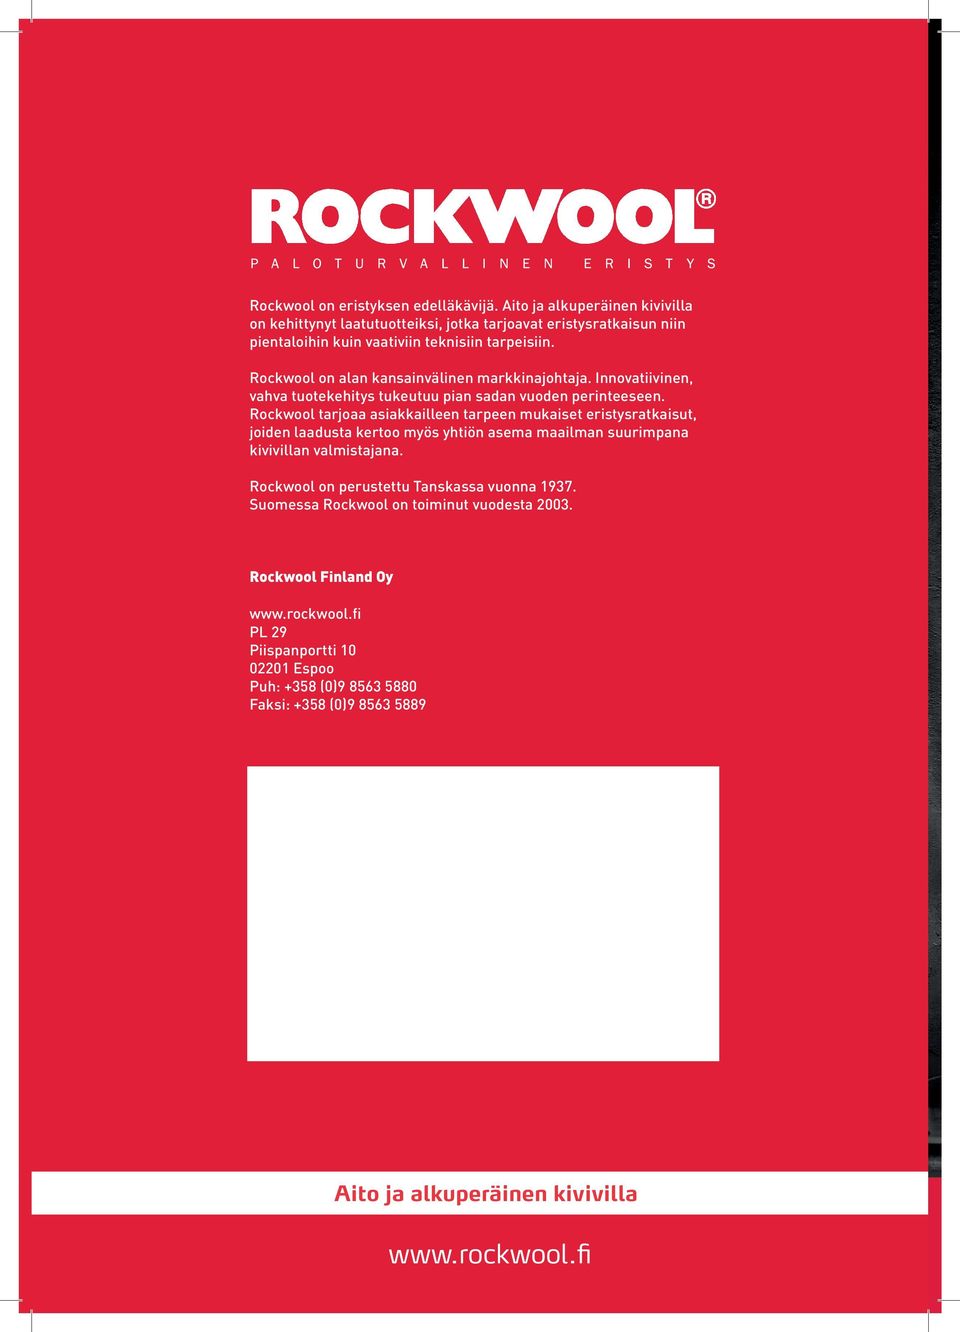 Rockwool on perustettu Tanskassa vuonna 1937. Suomessa Rockwool on toiminut vuodesta 2003. Rockwool Finland Oy www.rockwool.